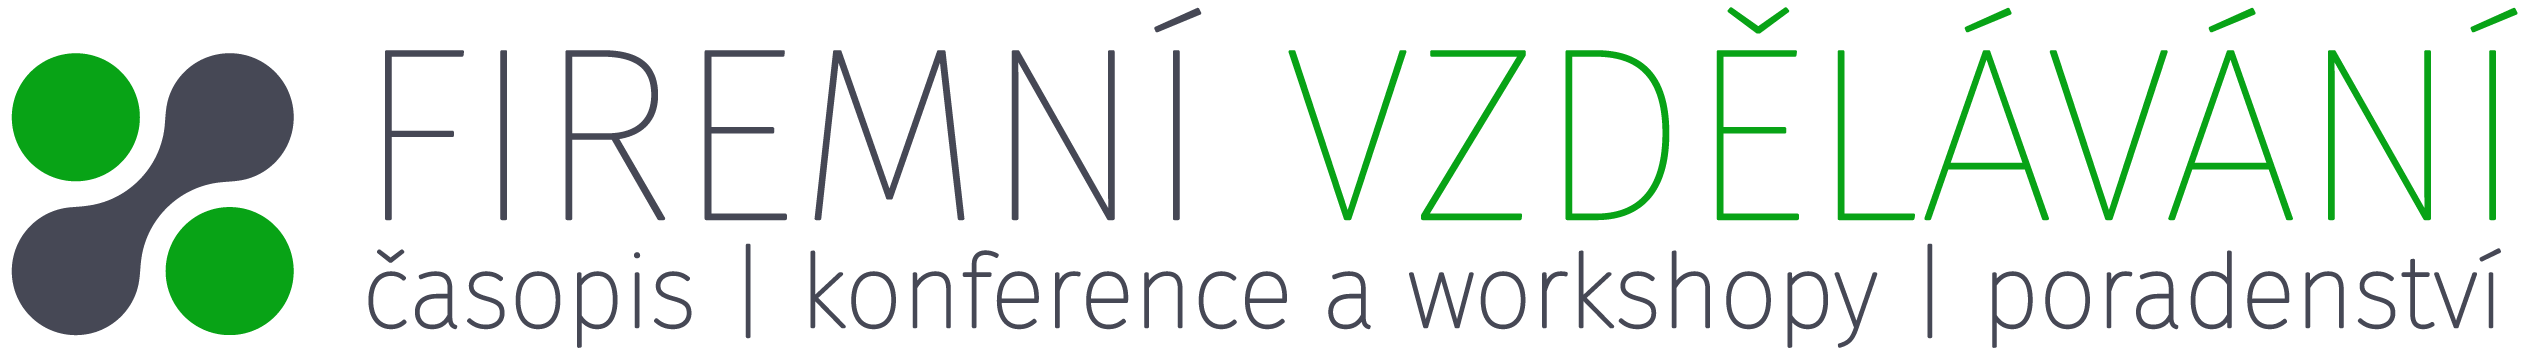 FV - Logo 02